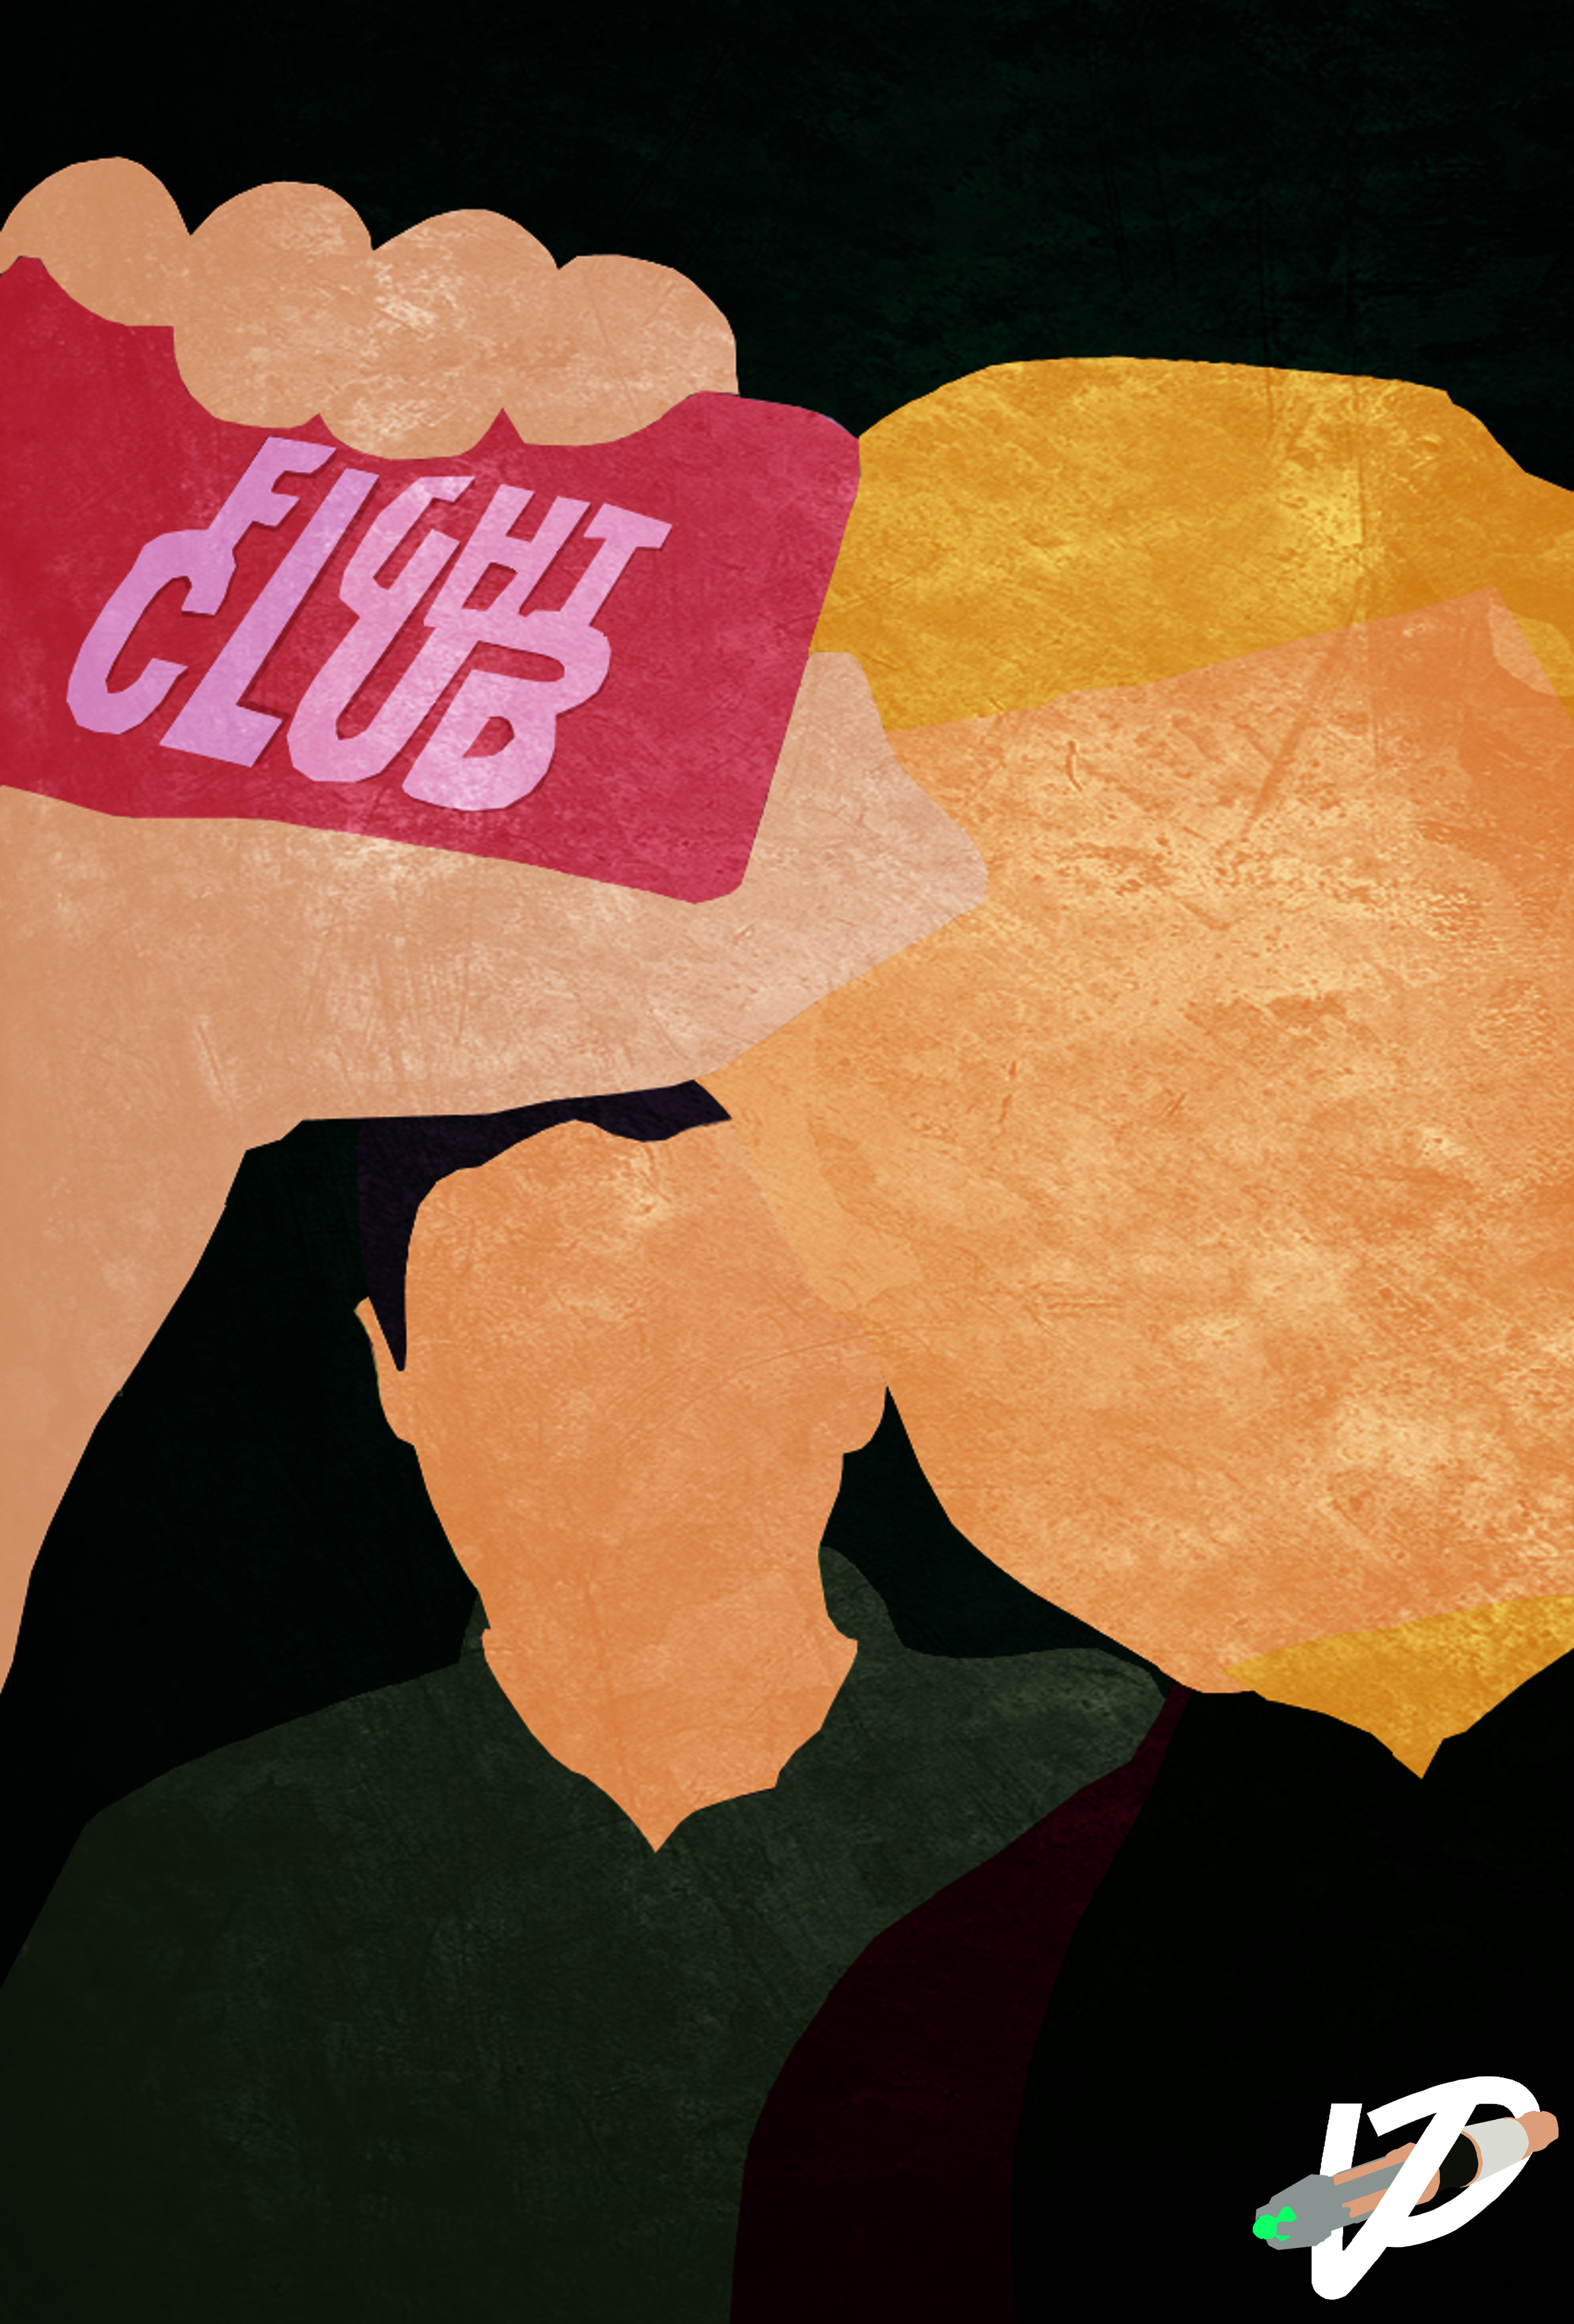 Fight club minimalist poster by theValeDecem on DeviantArt